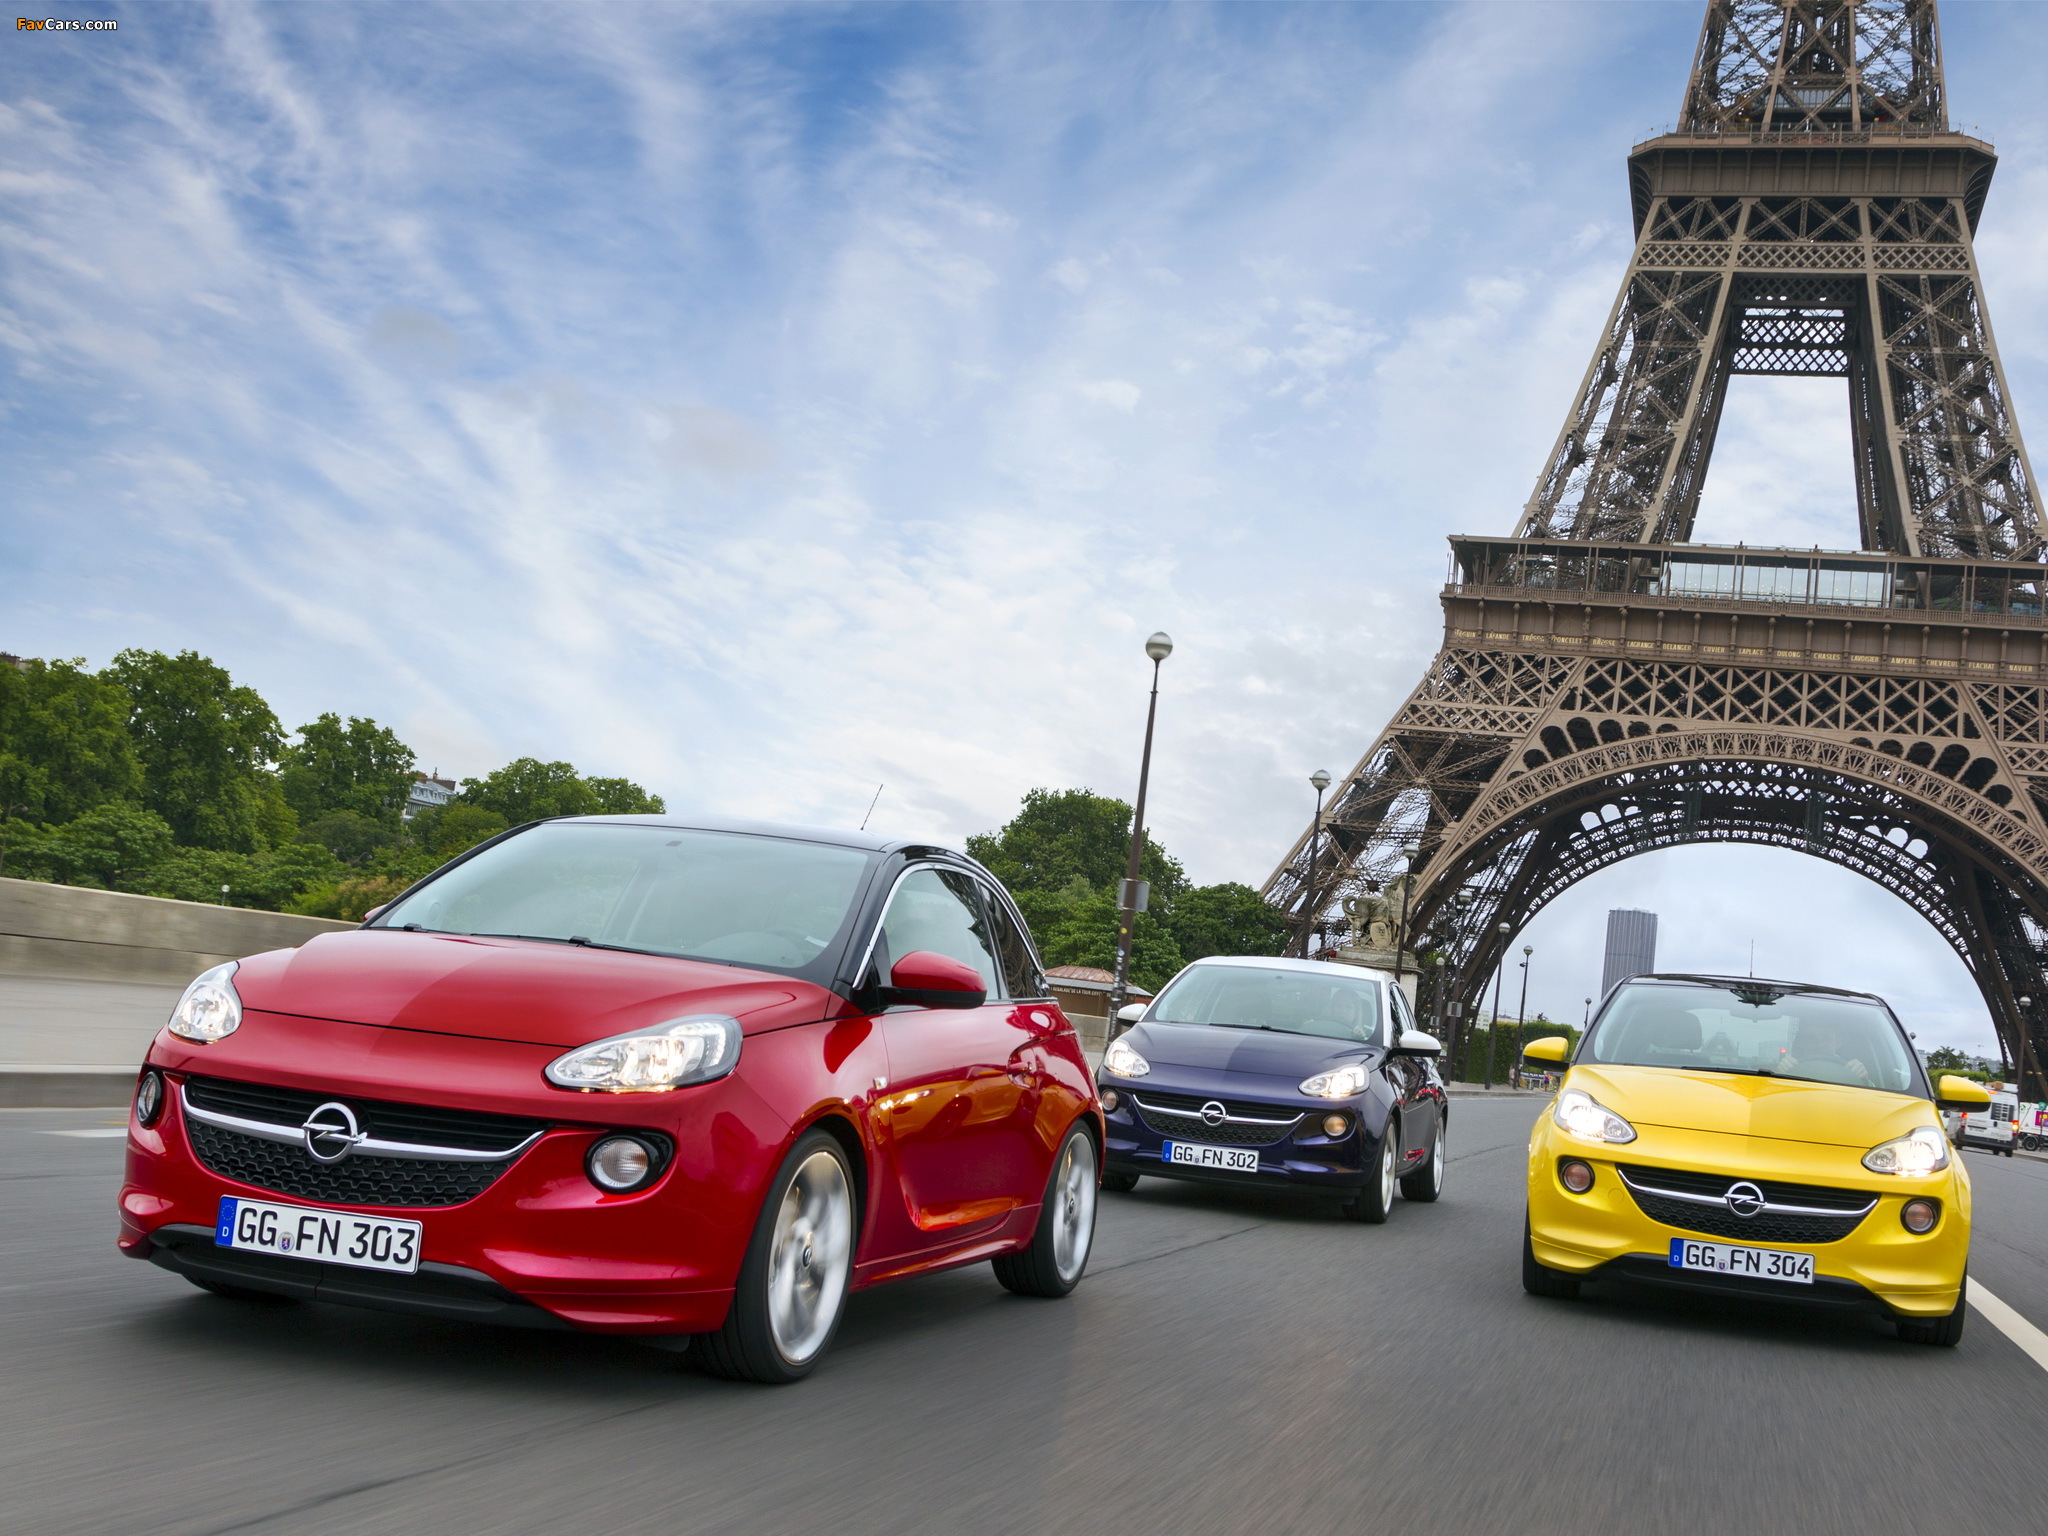 Француз авто. Opel Adam 2012. Ситроен во Франции. Машины в Париже. Французские марки автомобилей.